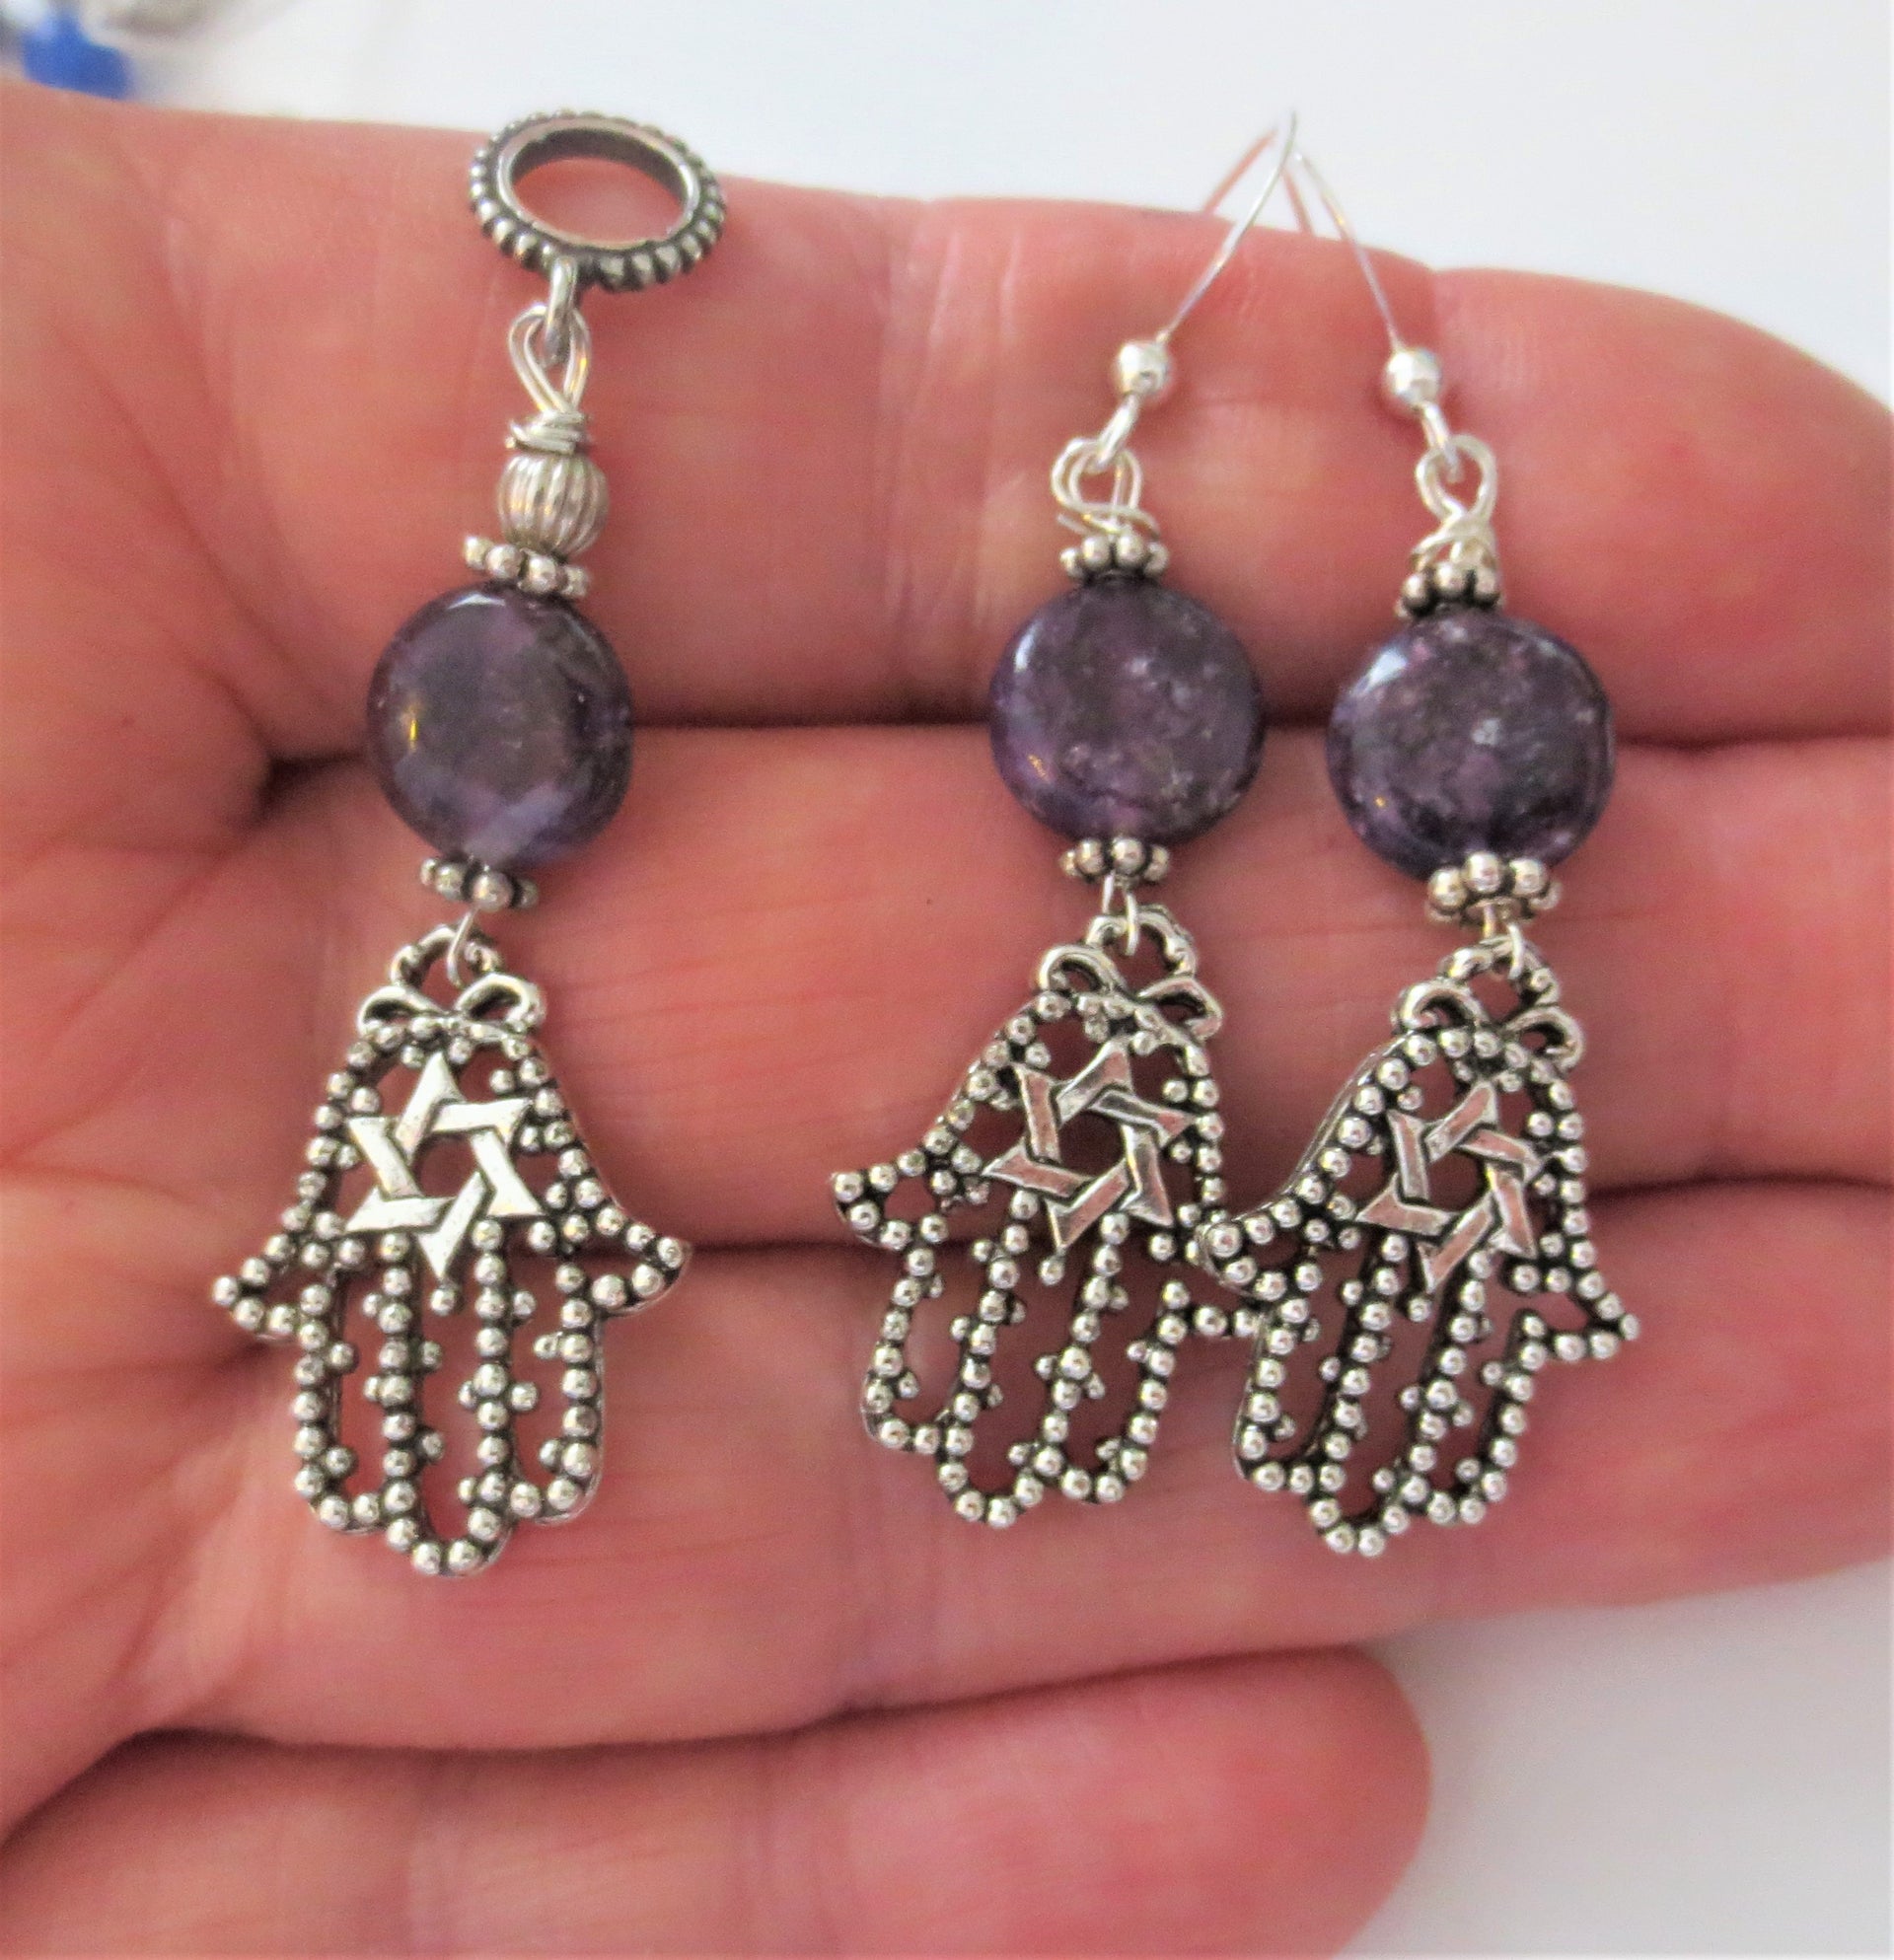 hamsa filigree pendant and earrings star of david jewelry set gemstone choice sterling silver regular ear wires / purple leopdite